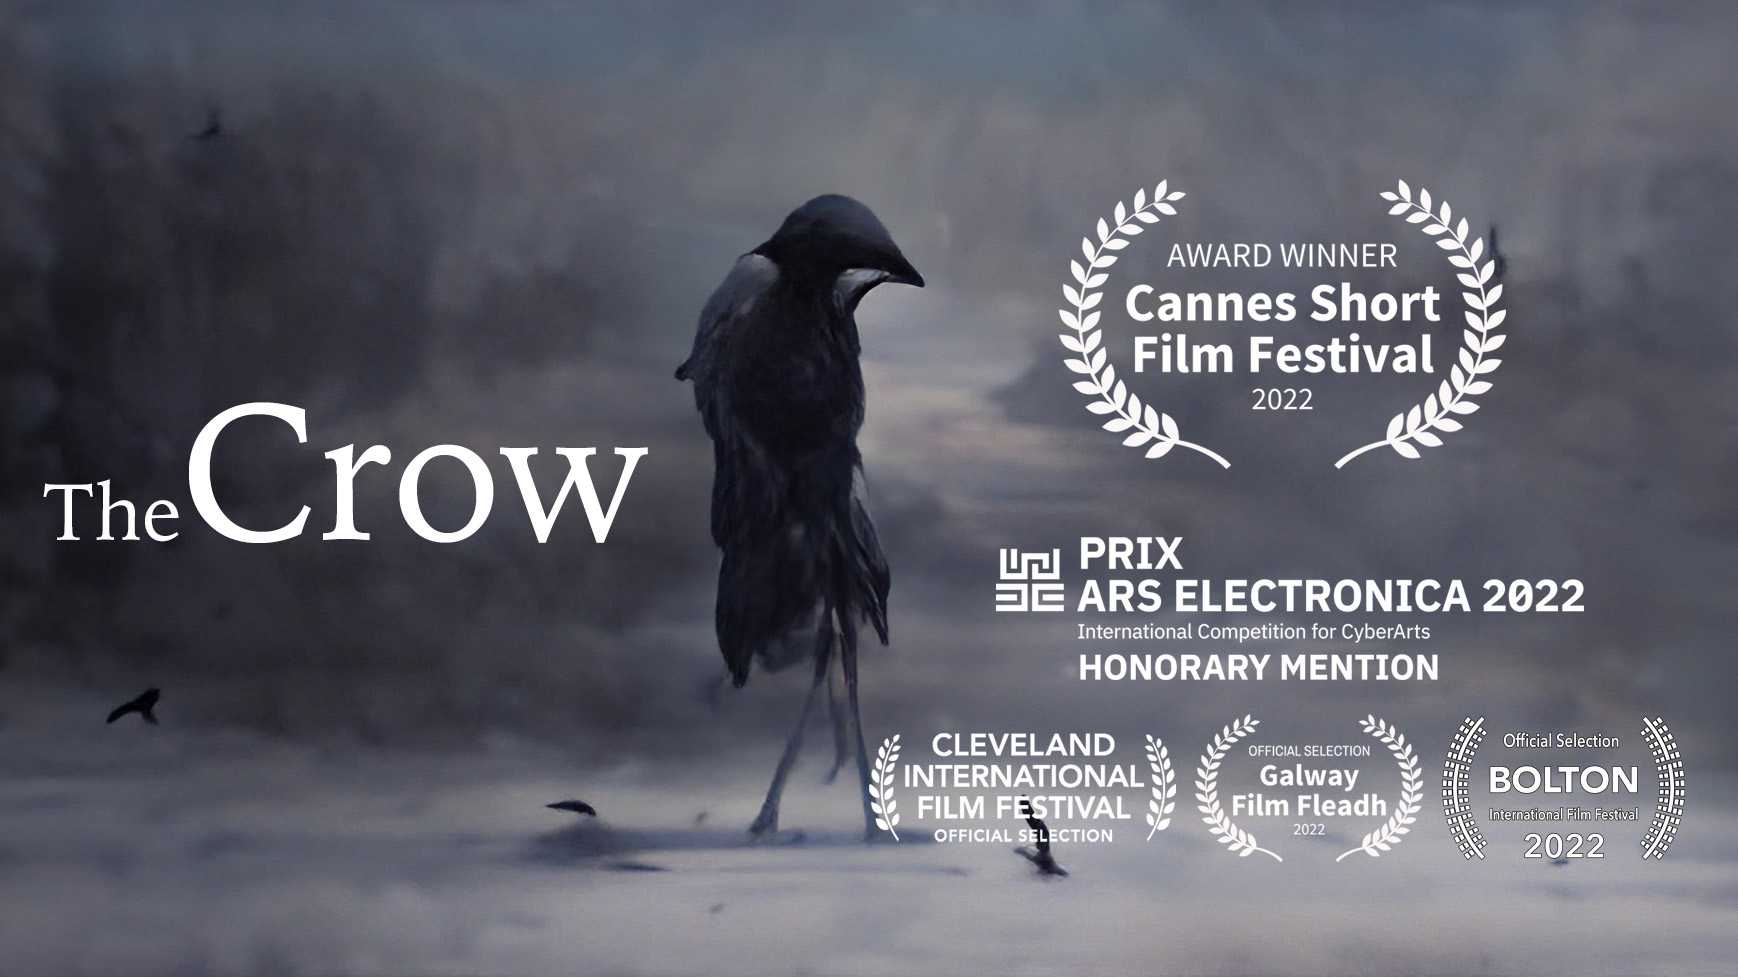 The Crow: Short Film by Glenn Marshall, Cannes Short Film Award 2022, Prix Ars Electronica 2022